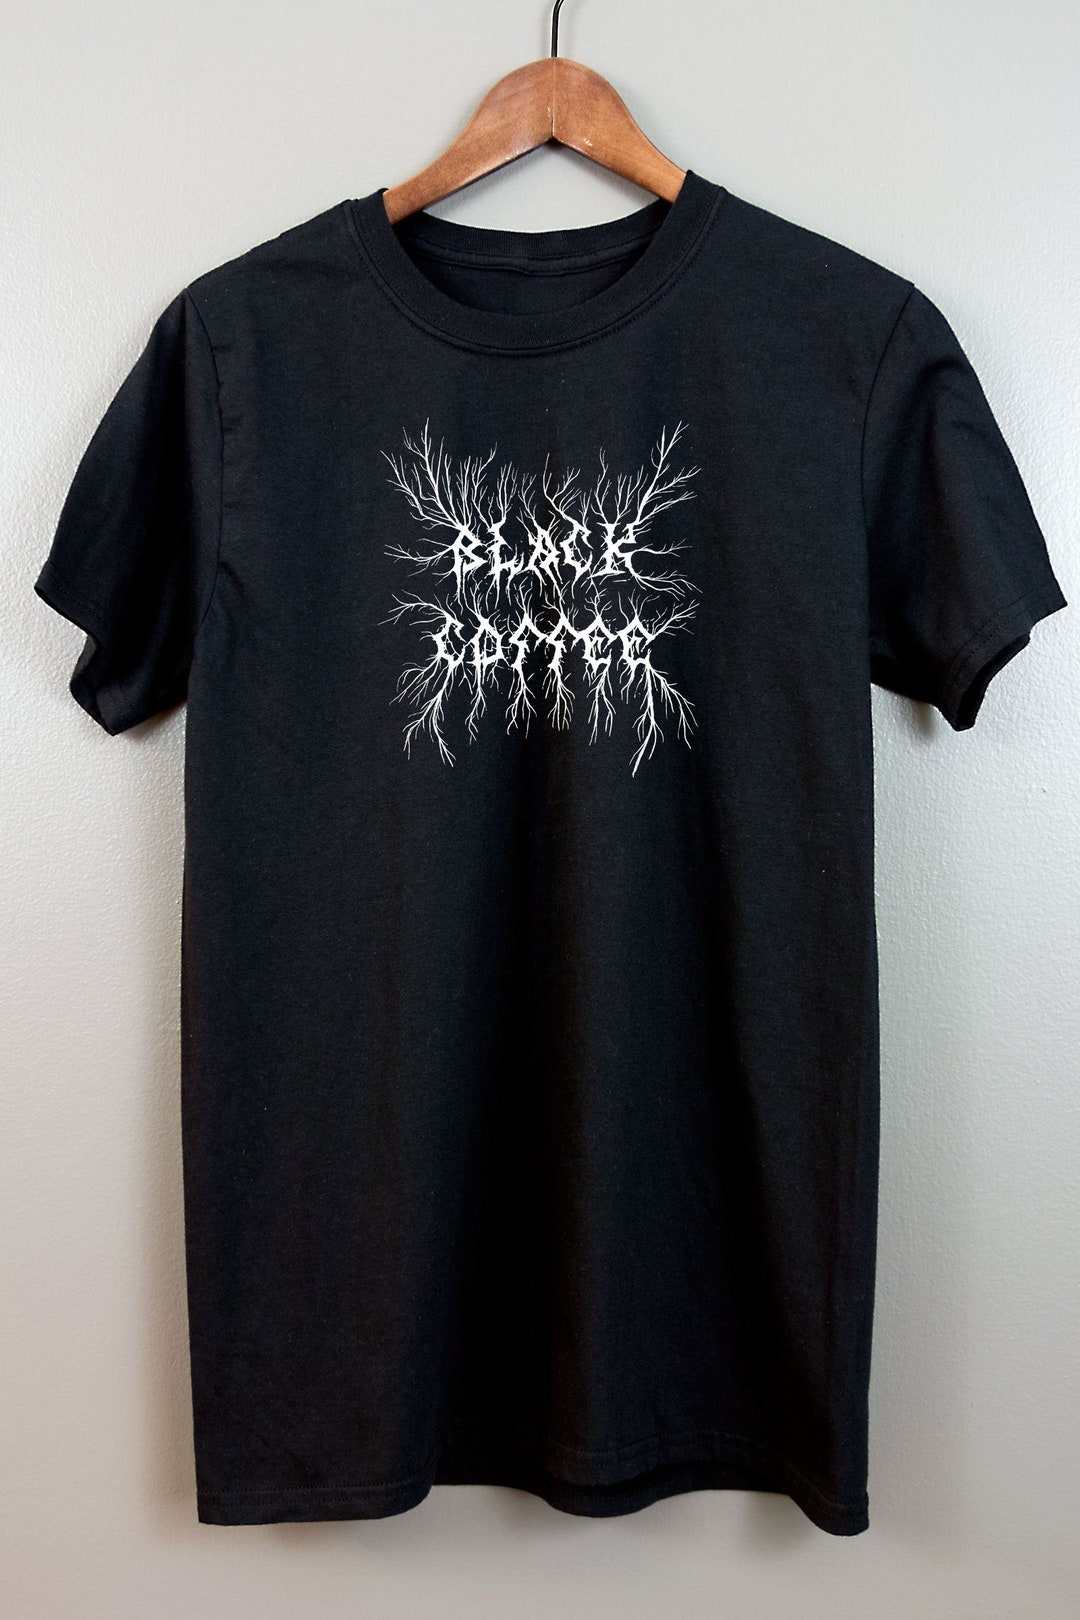 Black Metal Short-sleeve T Shirt Gothic Clothing Nu Goth - Etsy